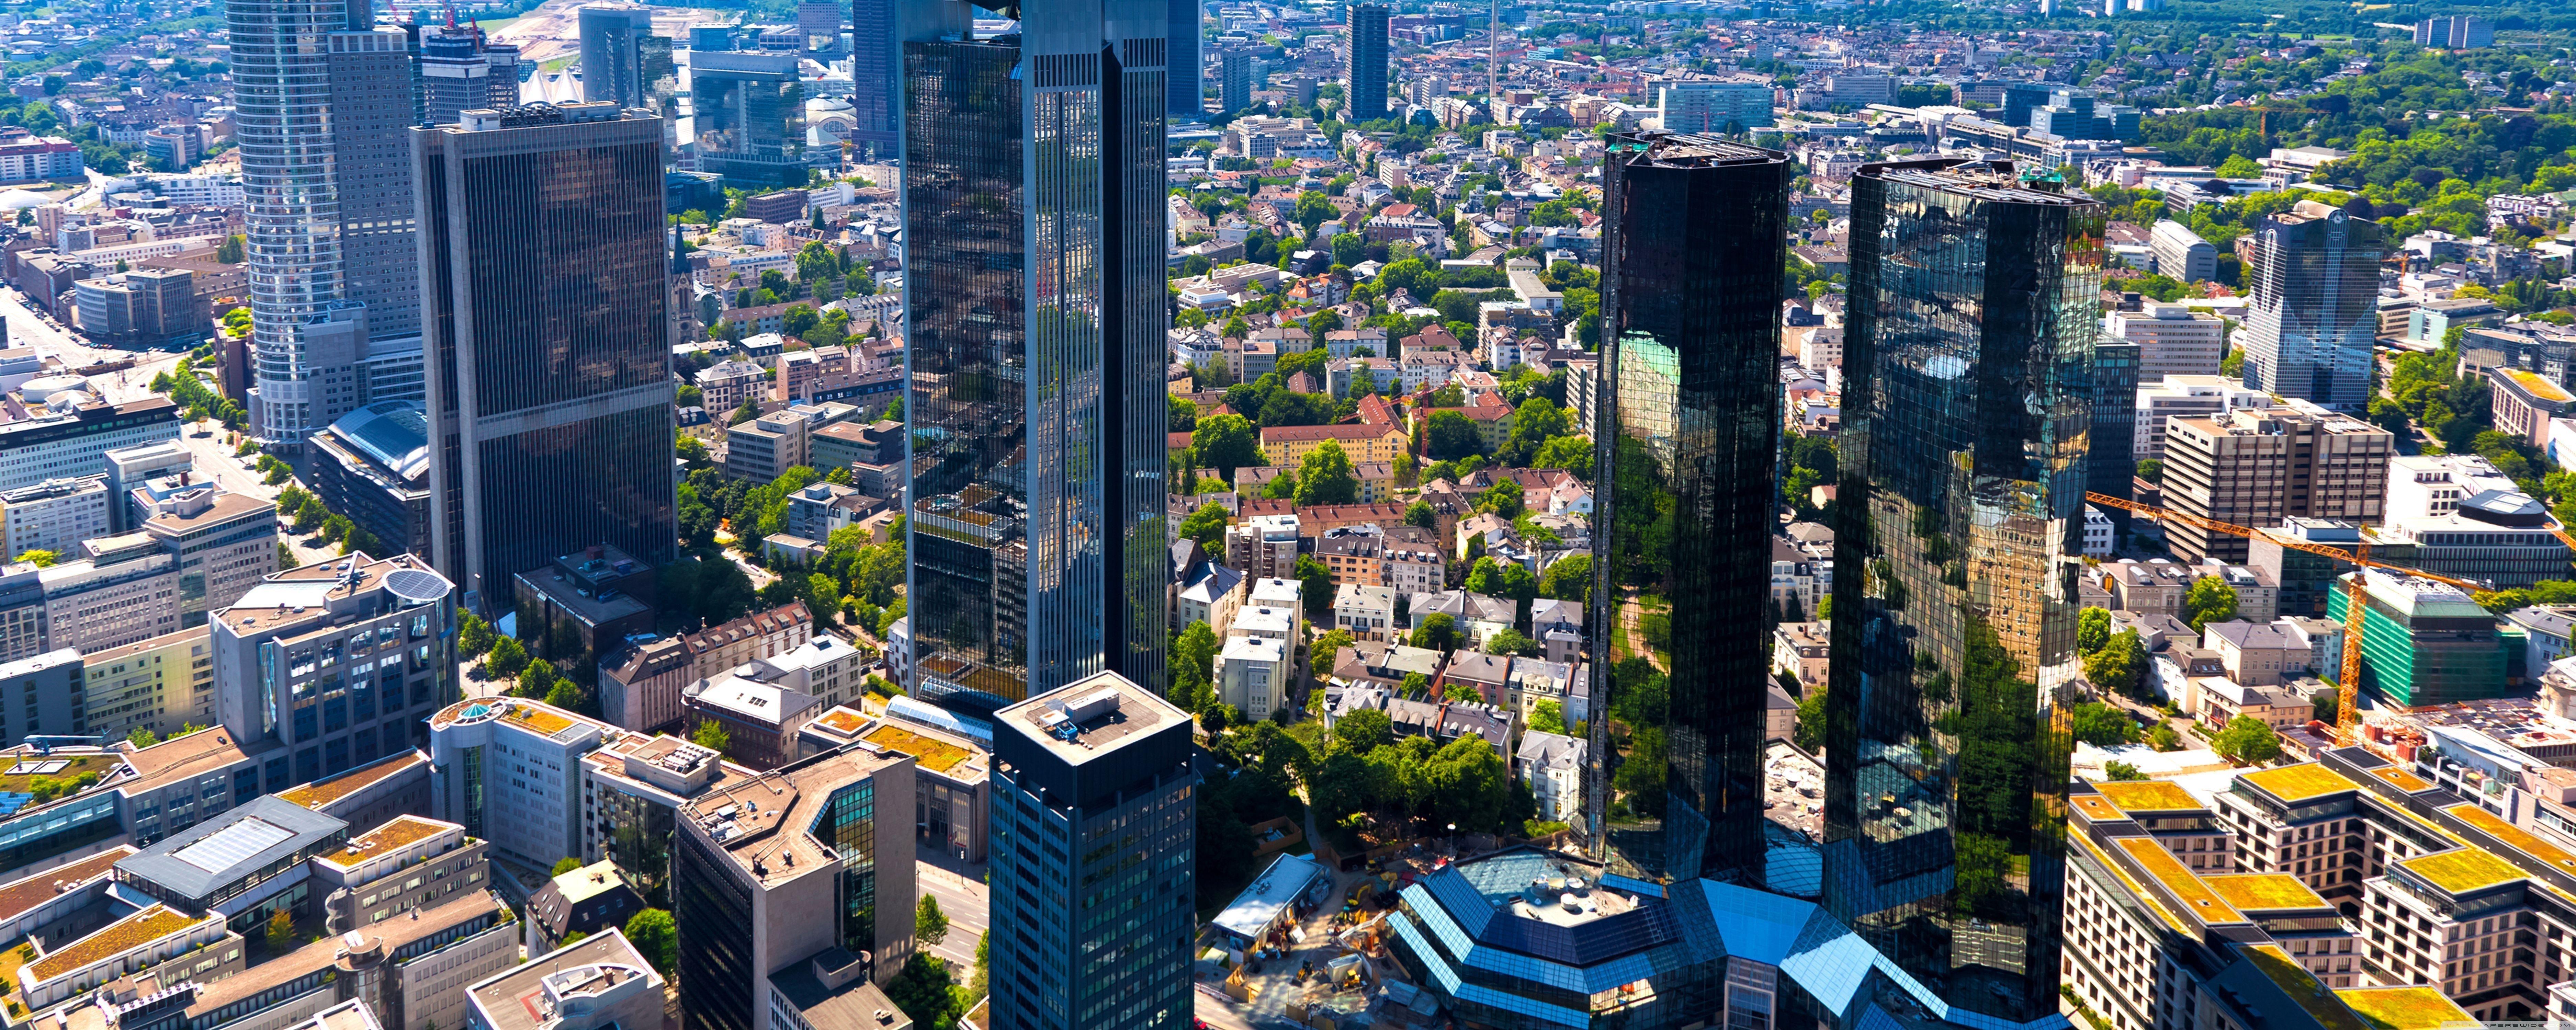 Frankfurt Panorama HD desktop wallpaper, High Definition